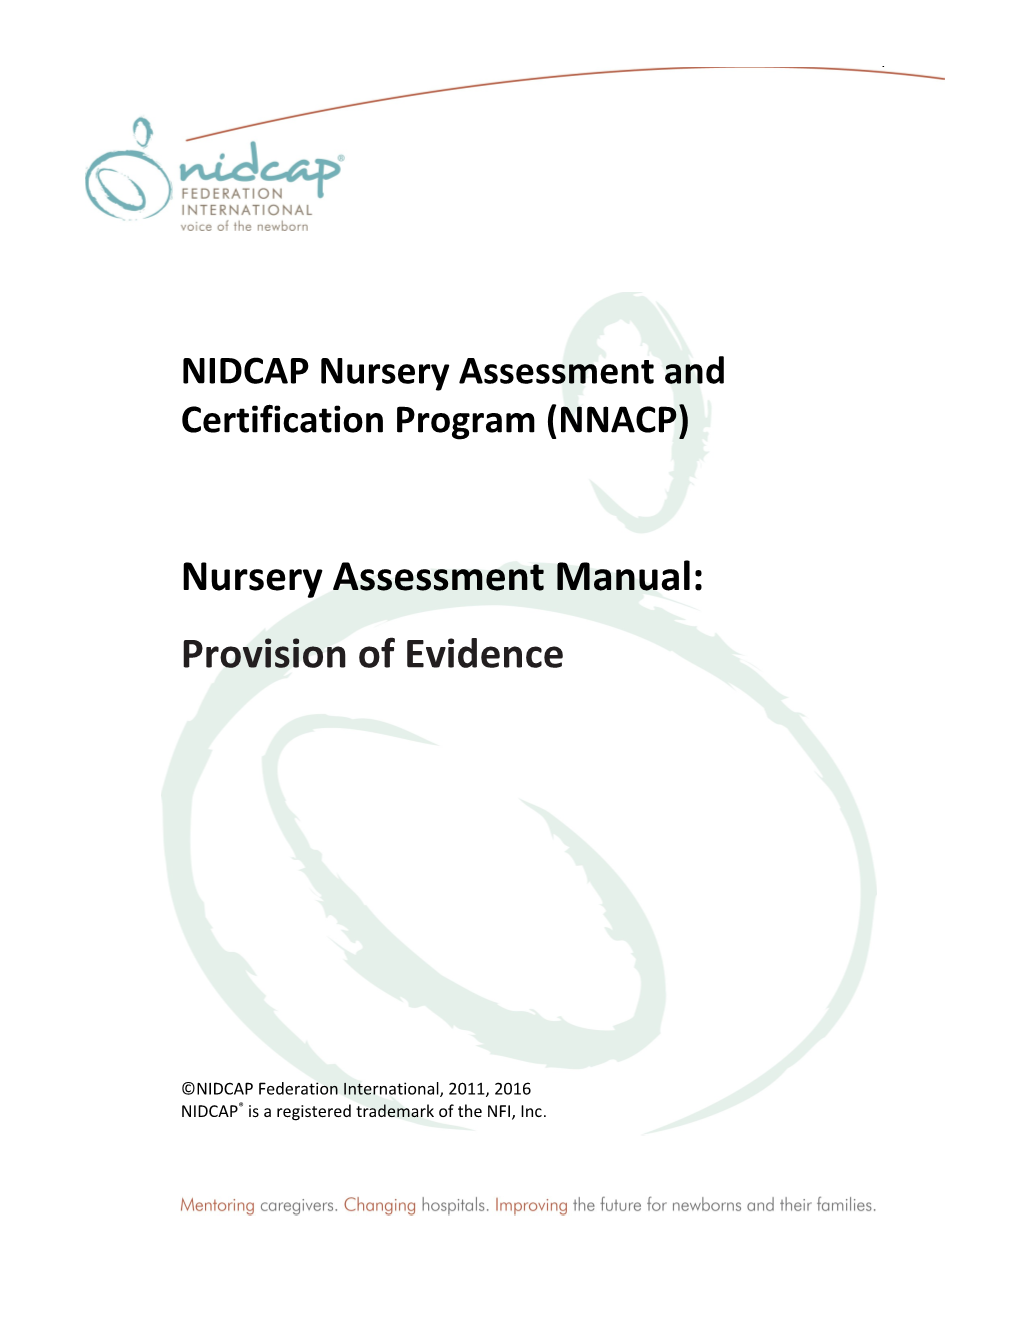 NIDCAP Nursery Assessment And